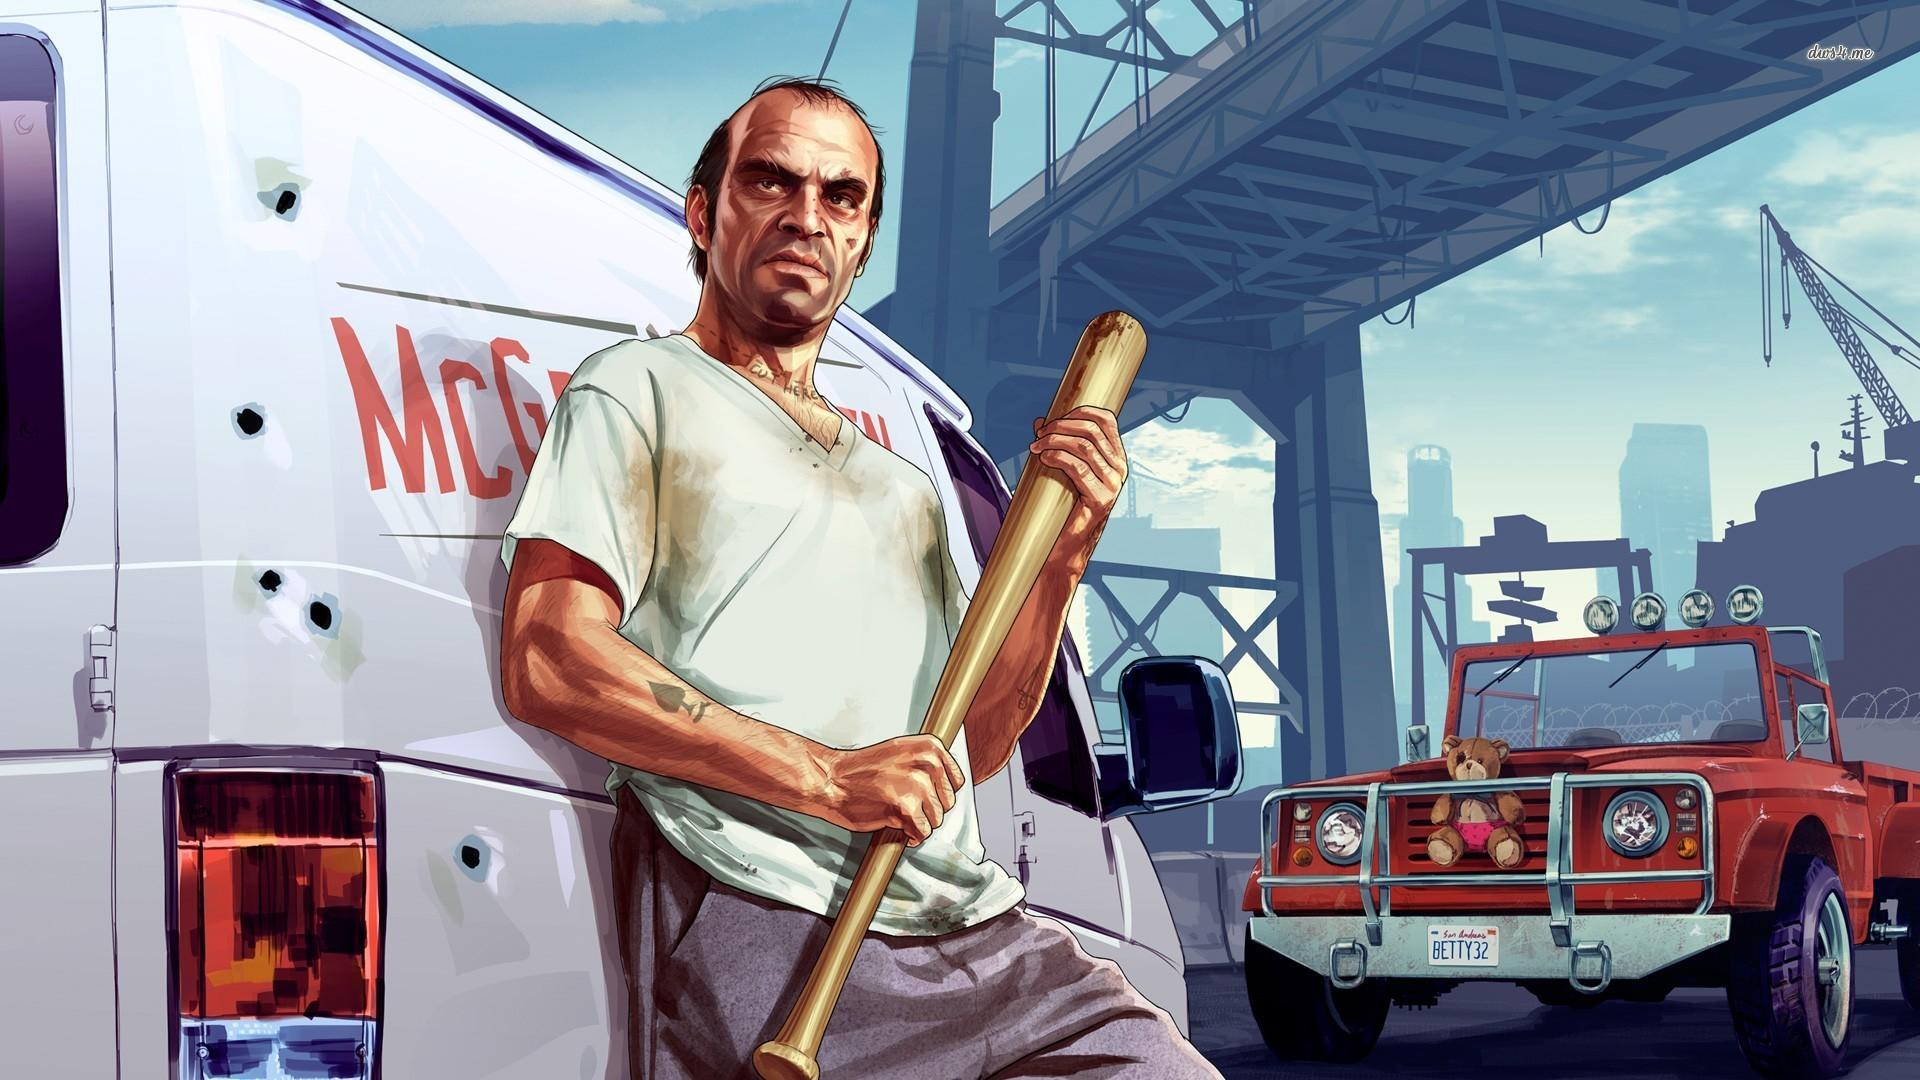 Trevor with a baseball bat Theft Auto V wallpaper